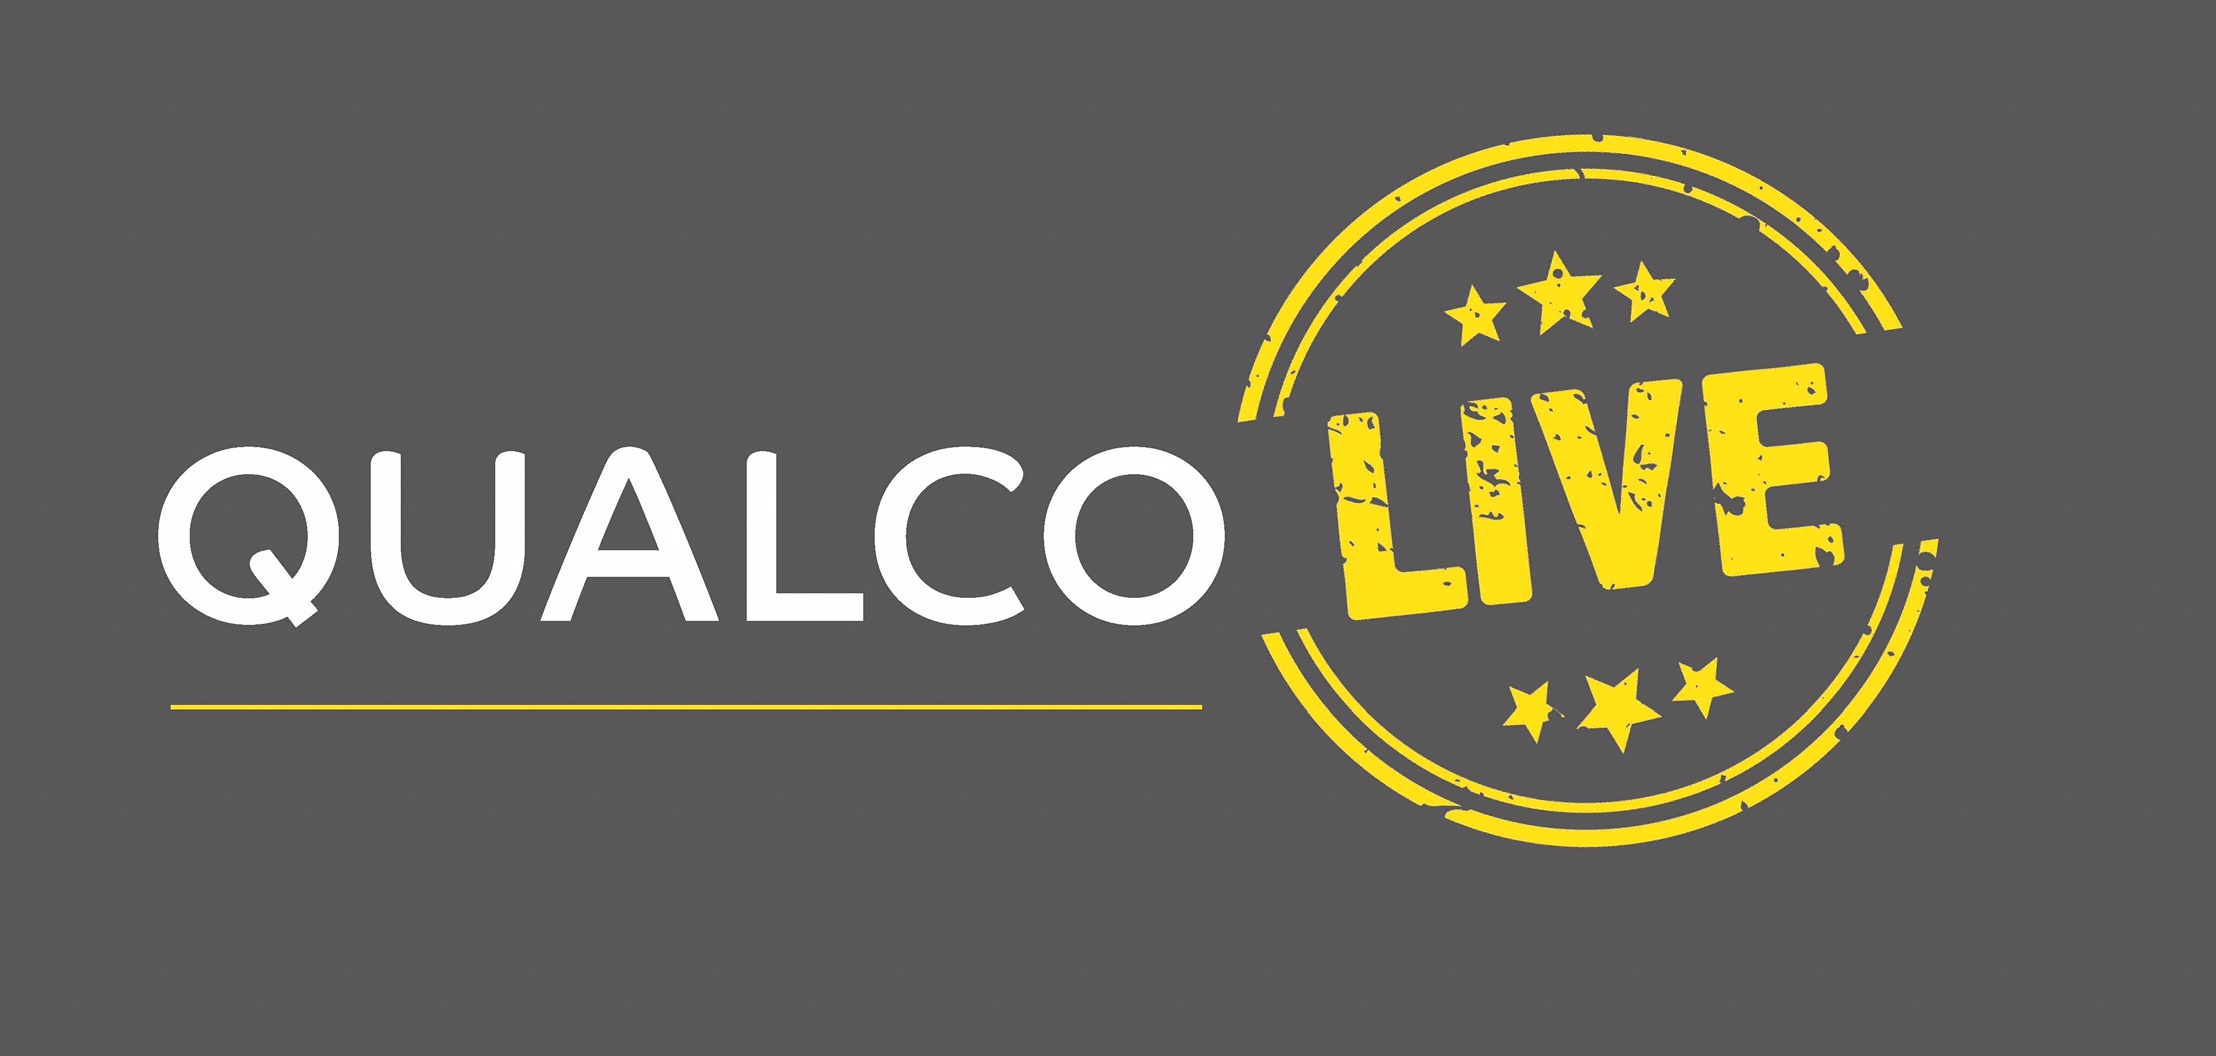 Qualco_LIVE_logos-options_Page_1[2].jpg